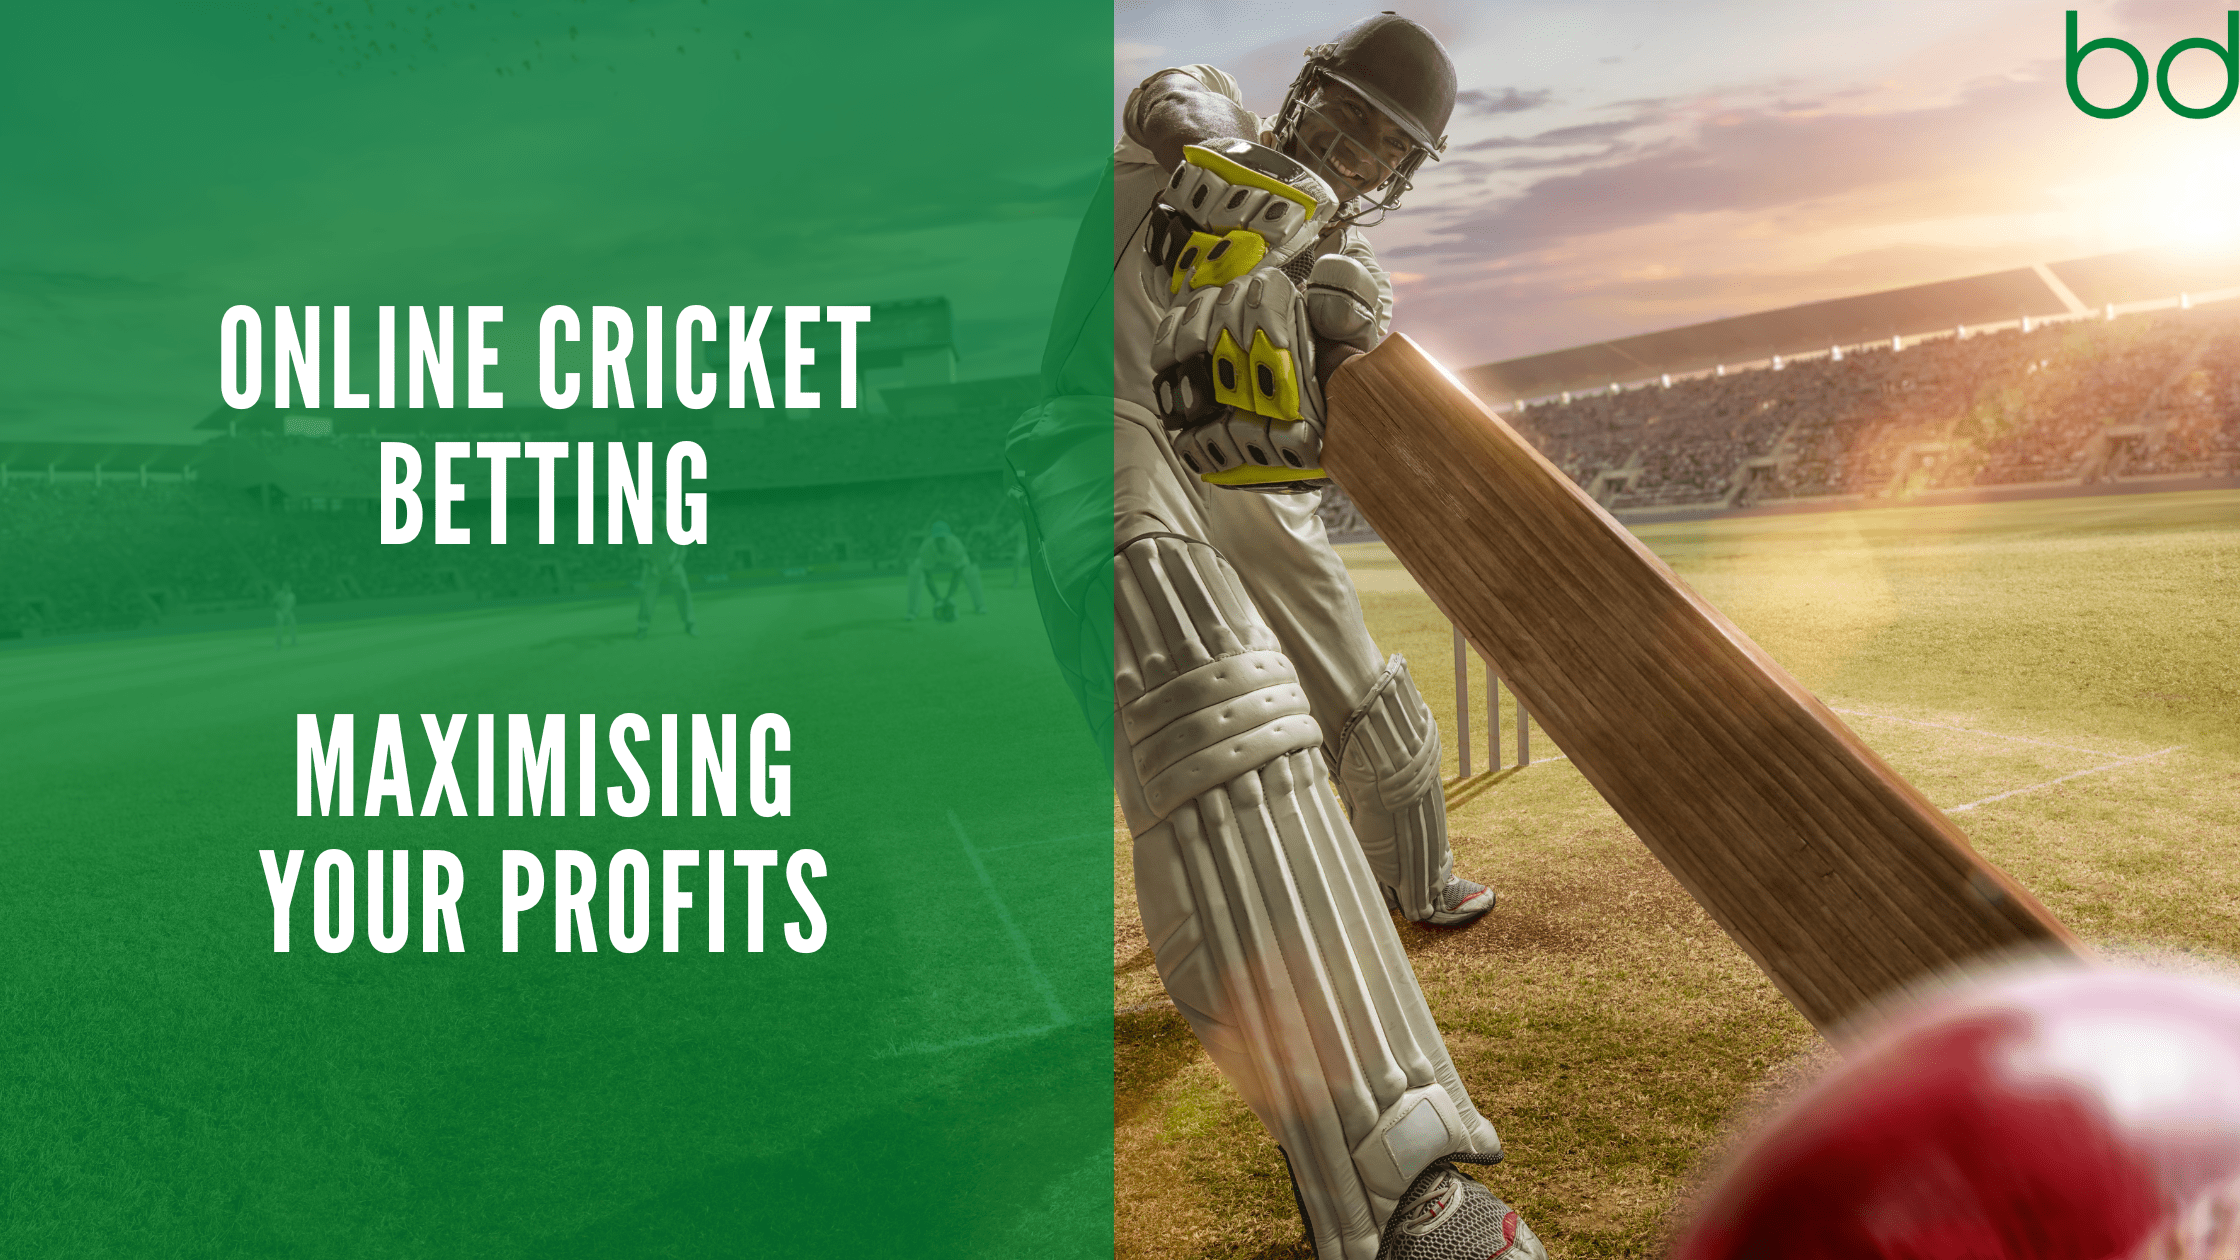 Online Cricket Betting - MAXIMISE YOUR PROFITS